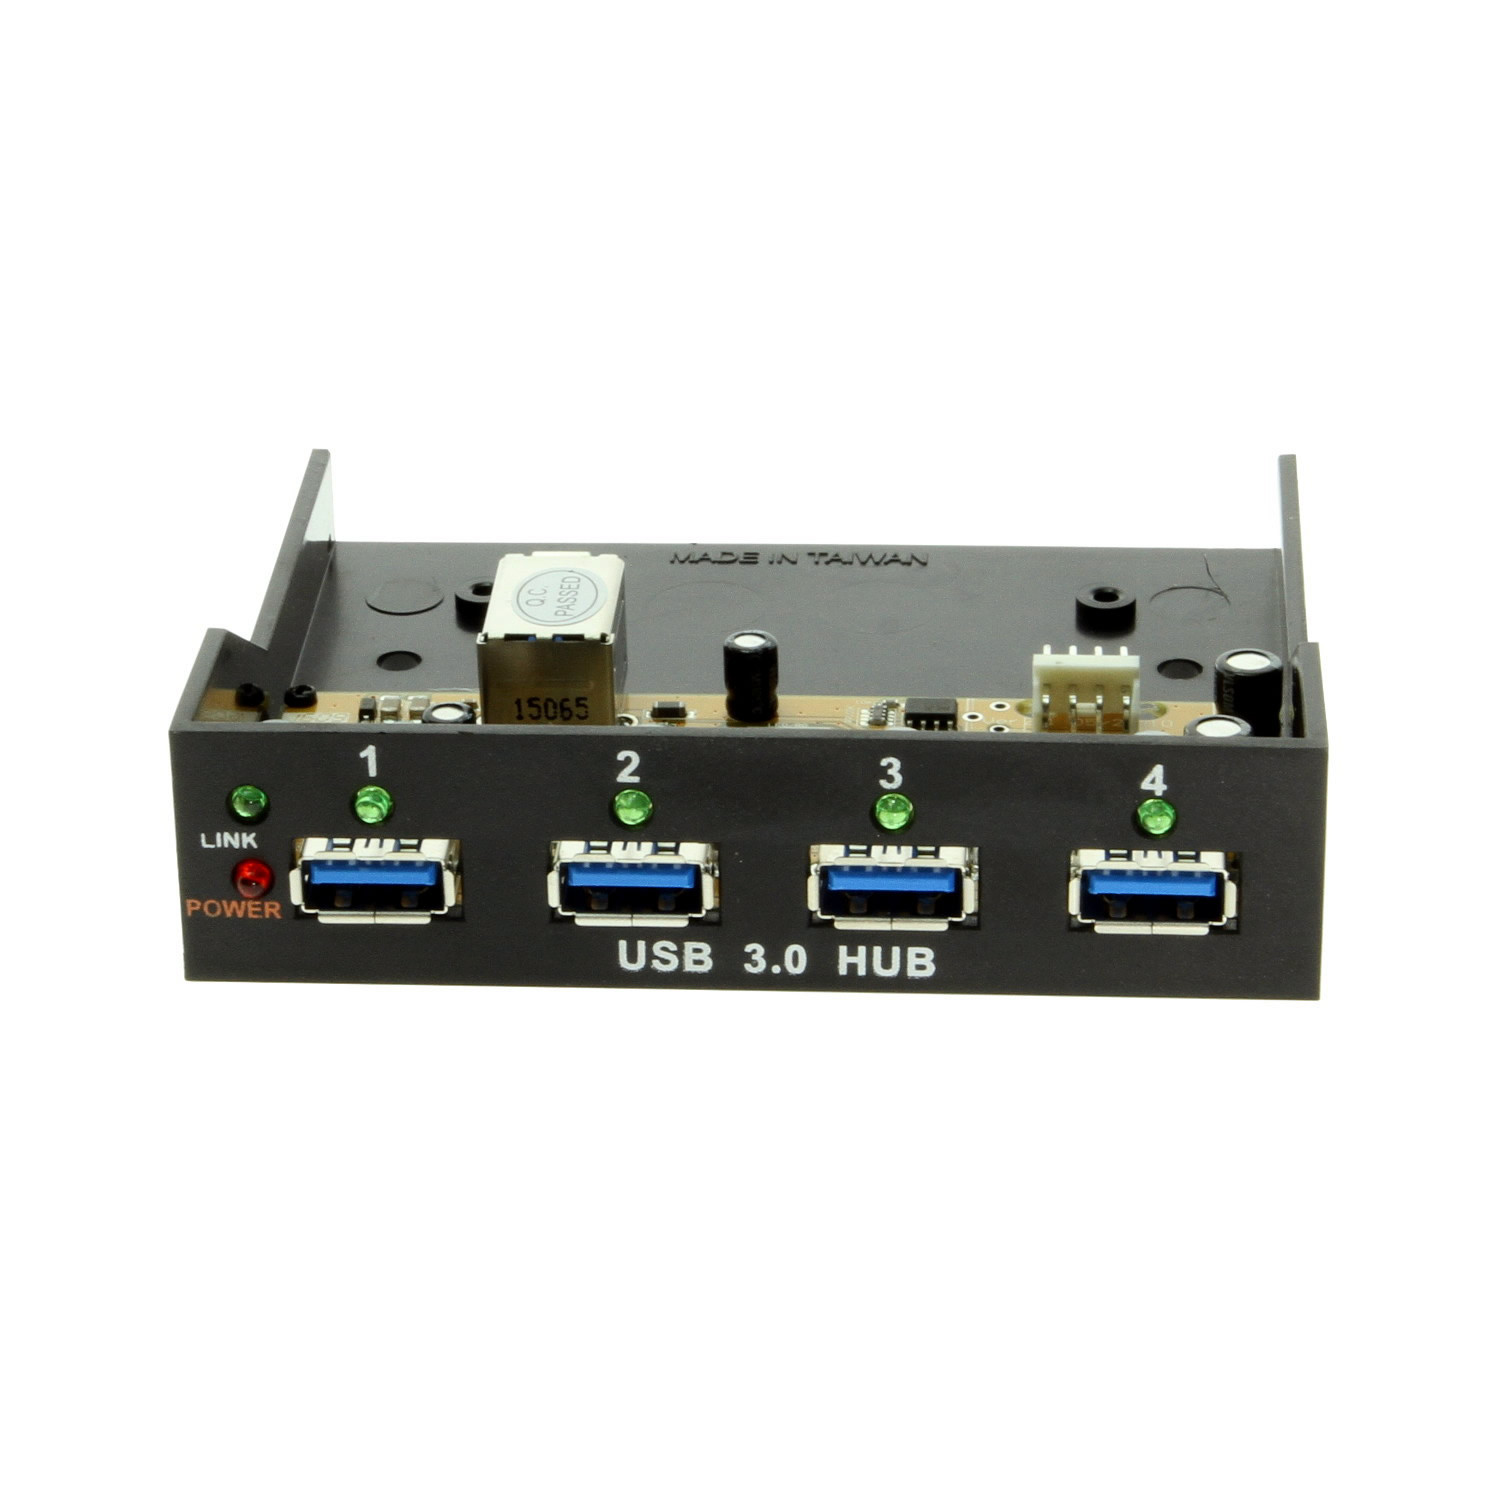 Internal Bay USB 3.0 4-Port VIA USB 3.0 SuperSpeed Chip Hub with LED